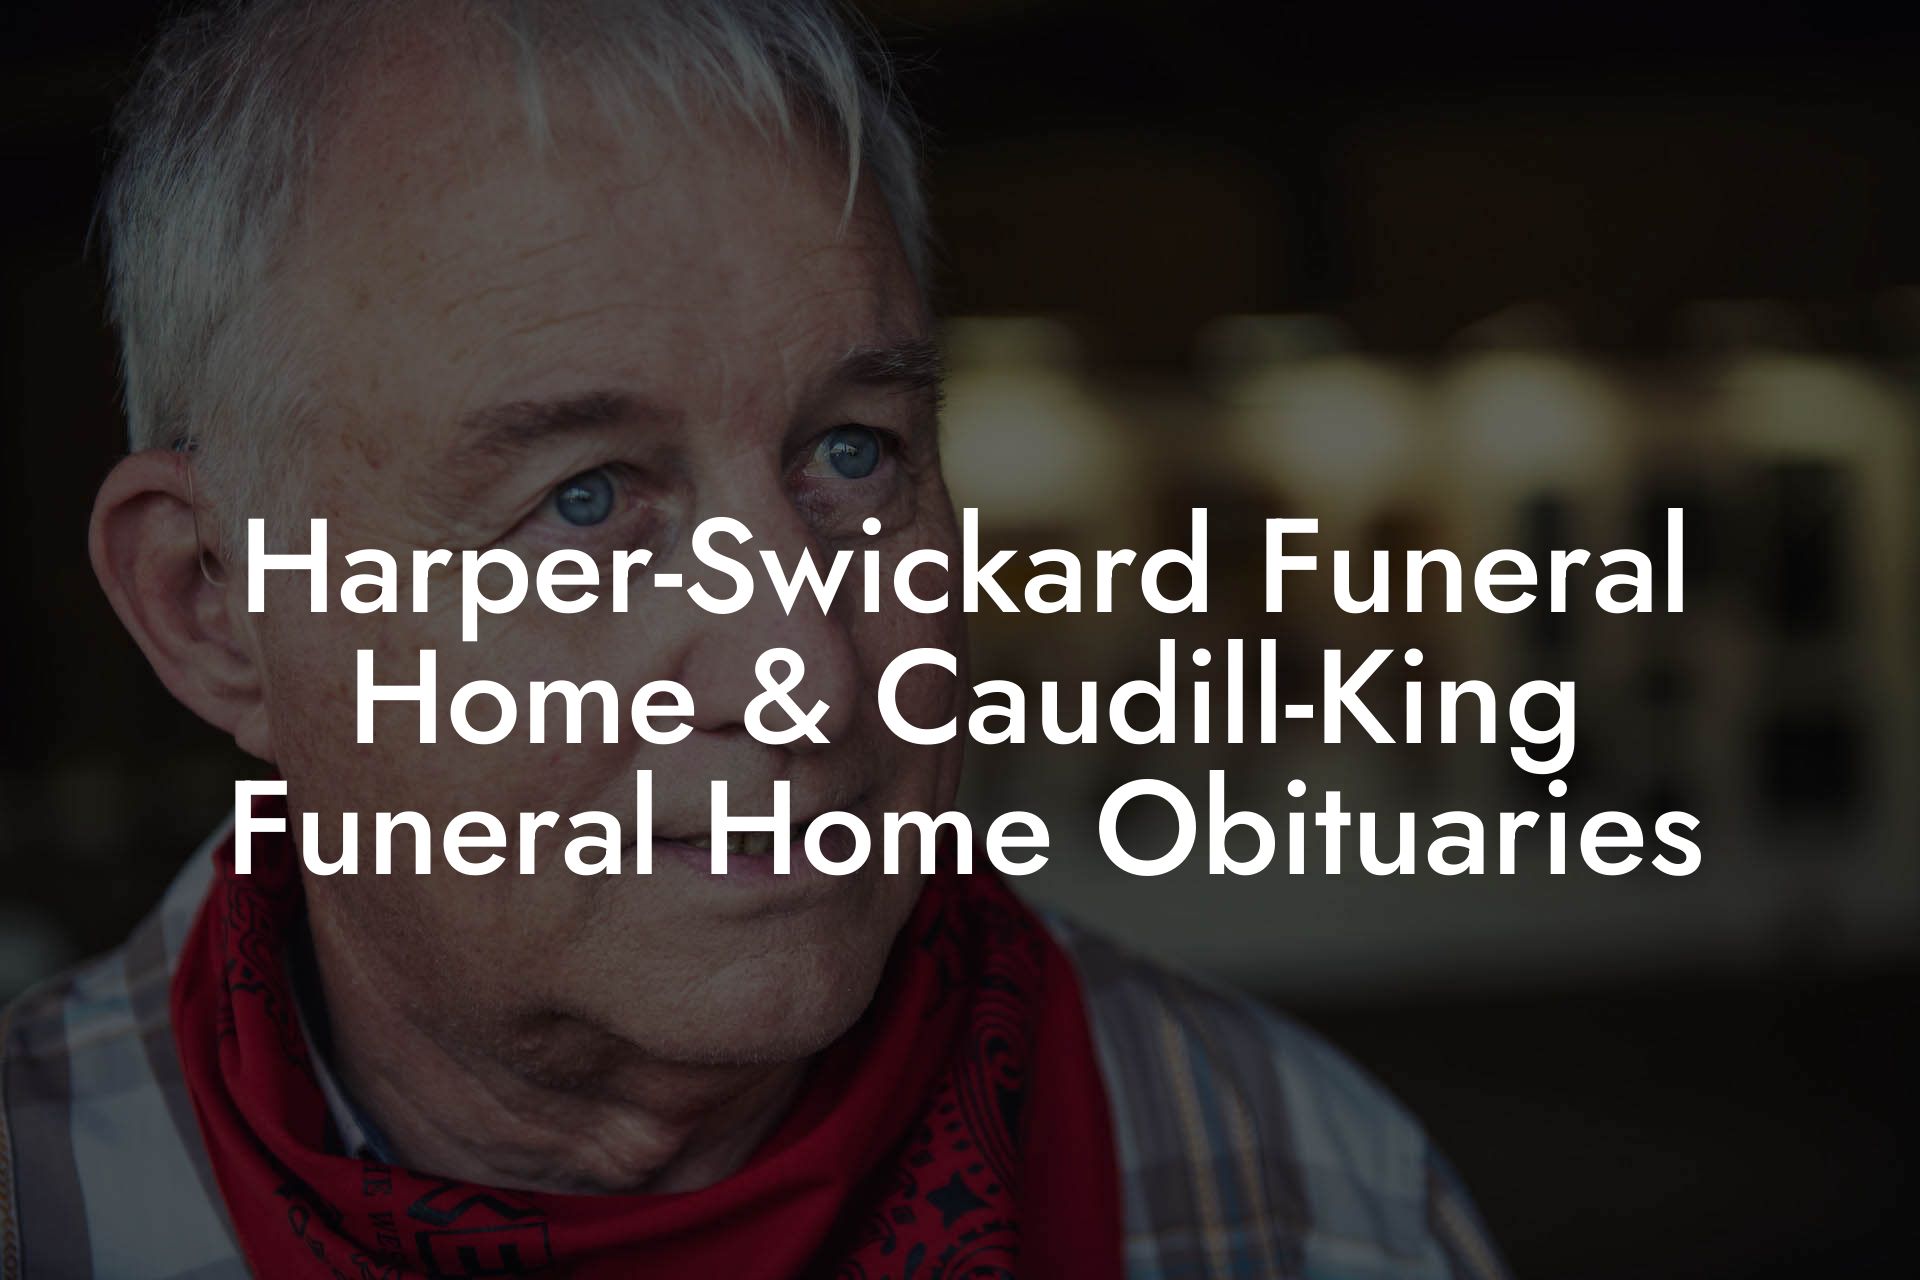 Harper-Swickard Funeral Home & Caudill-King Funeral Home Obituaries